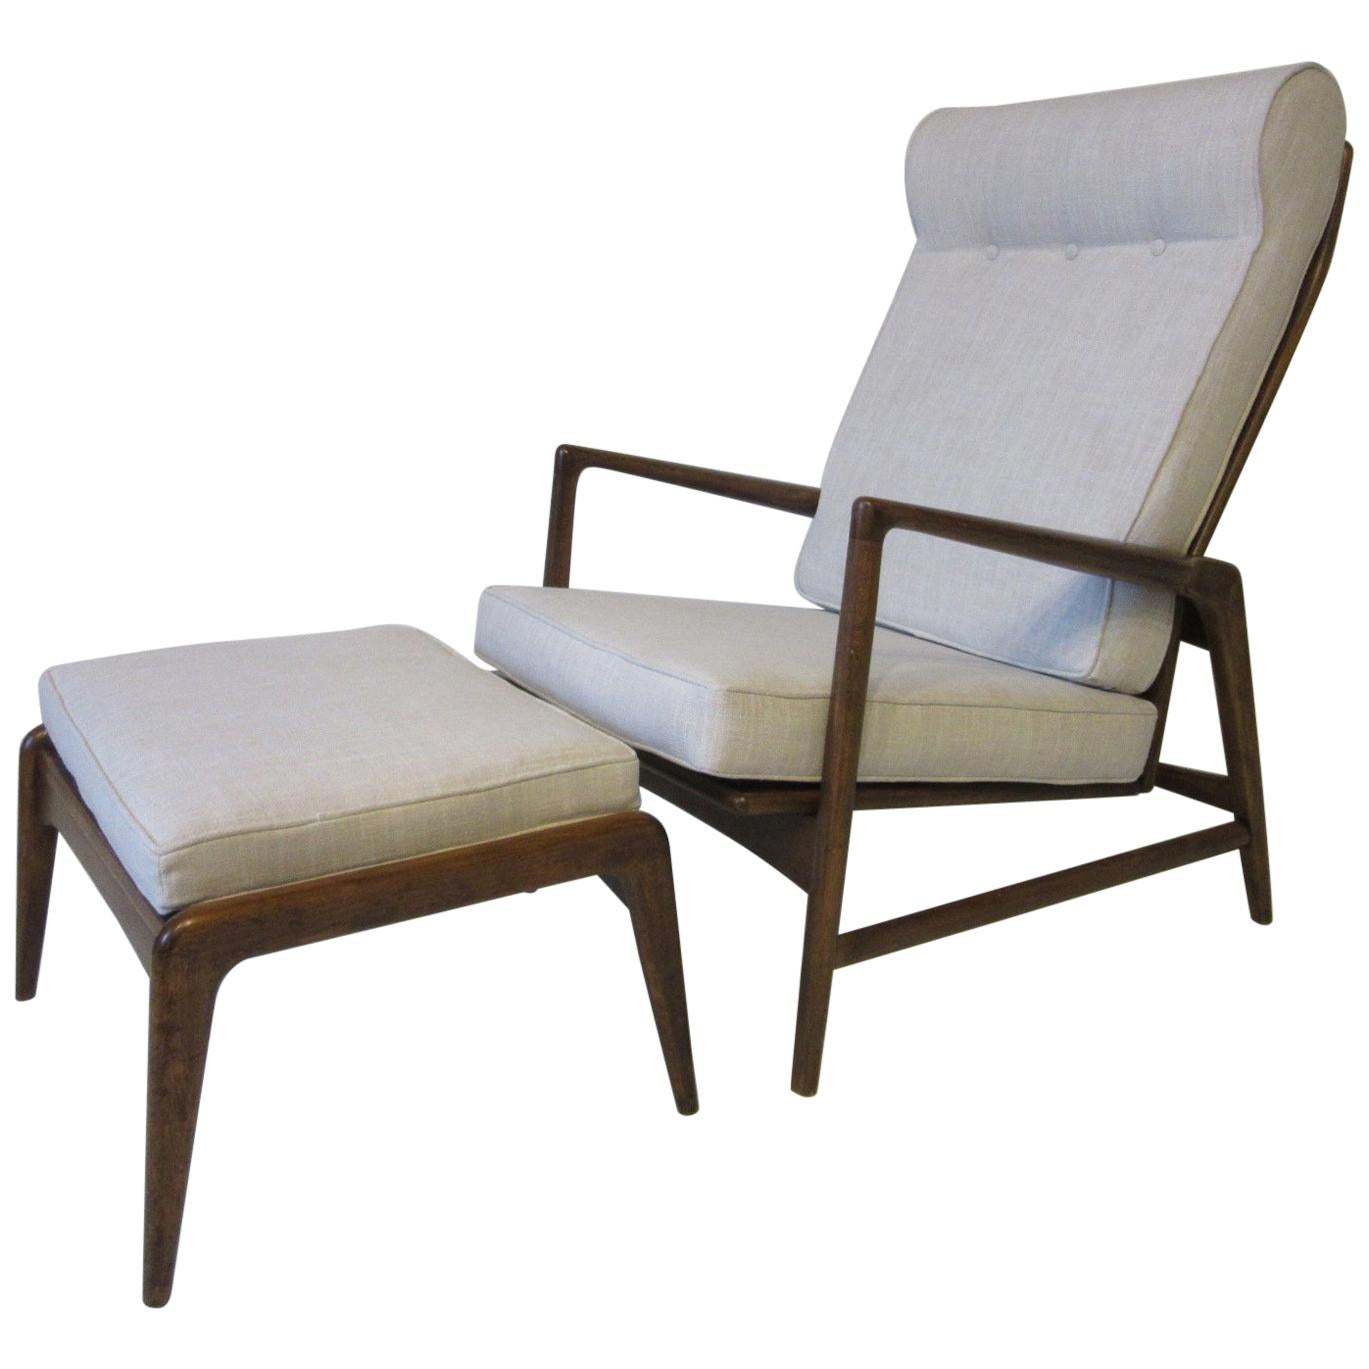 IB Kofod Larsen Danish Adjustable Reclining Lounge Chair with Ottoman